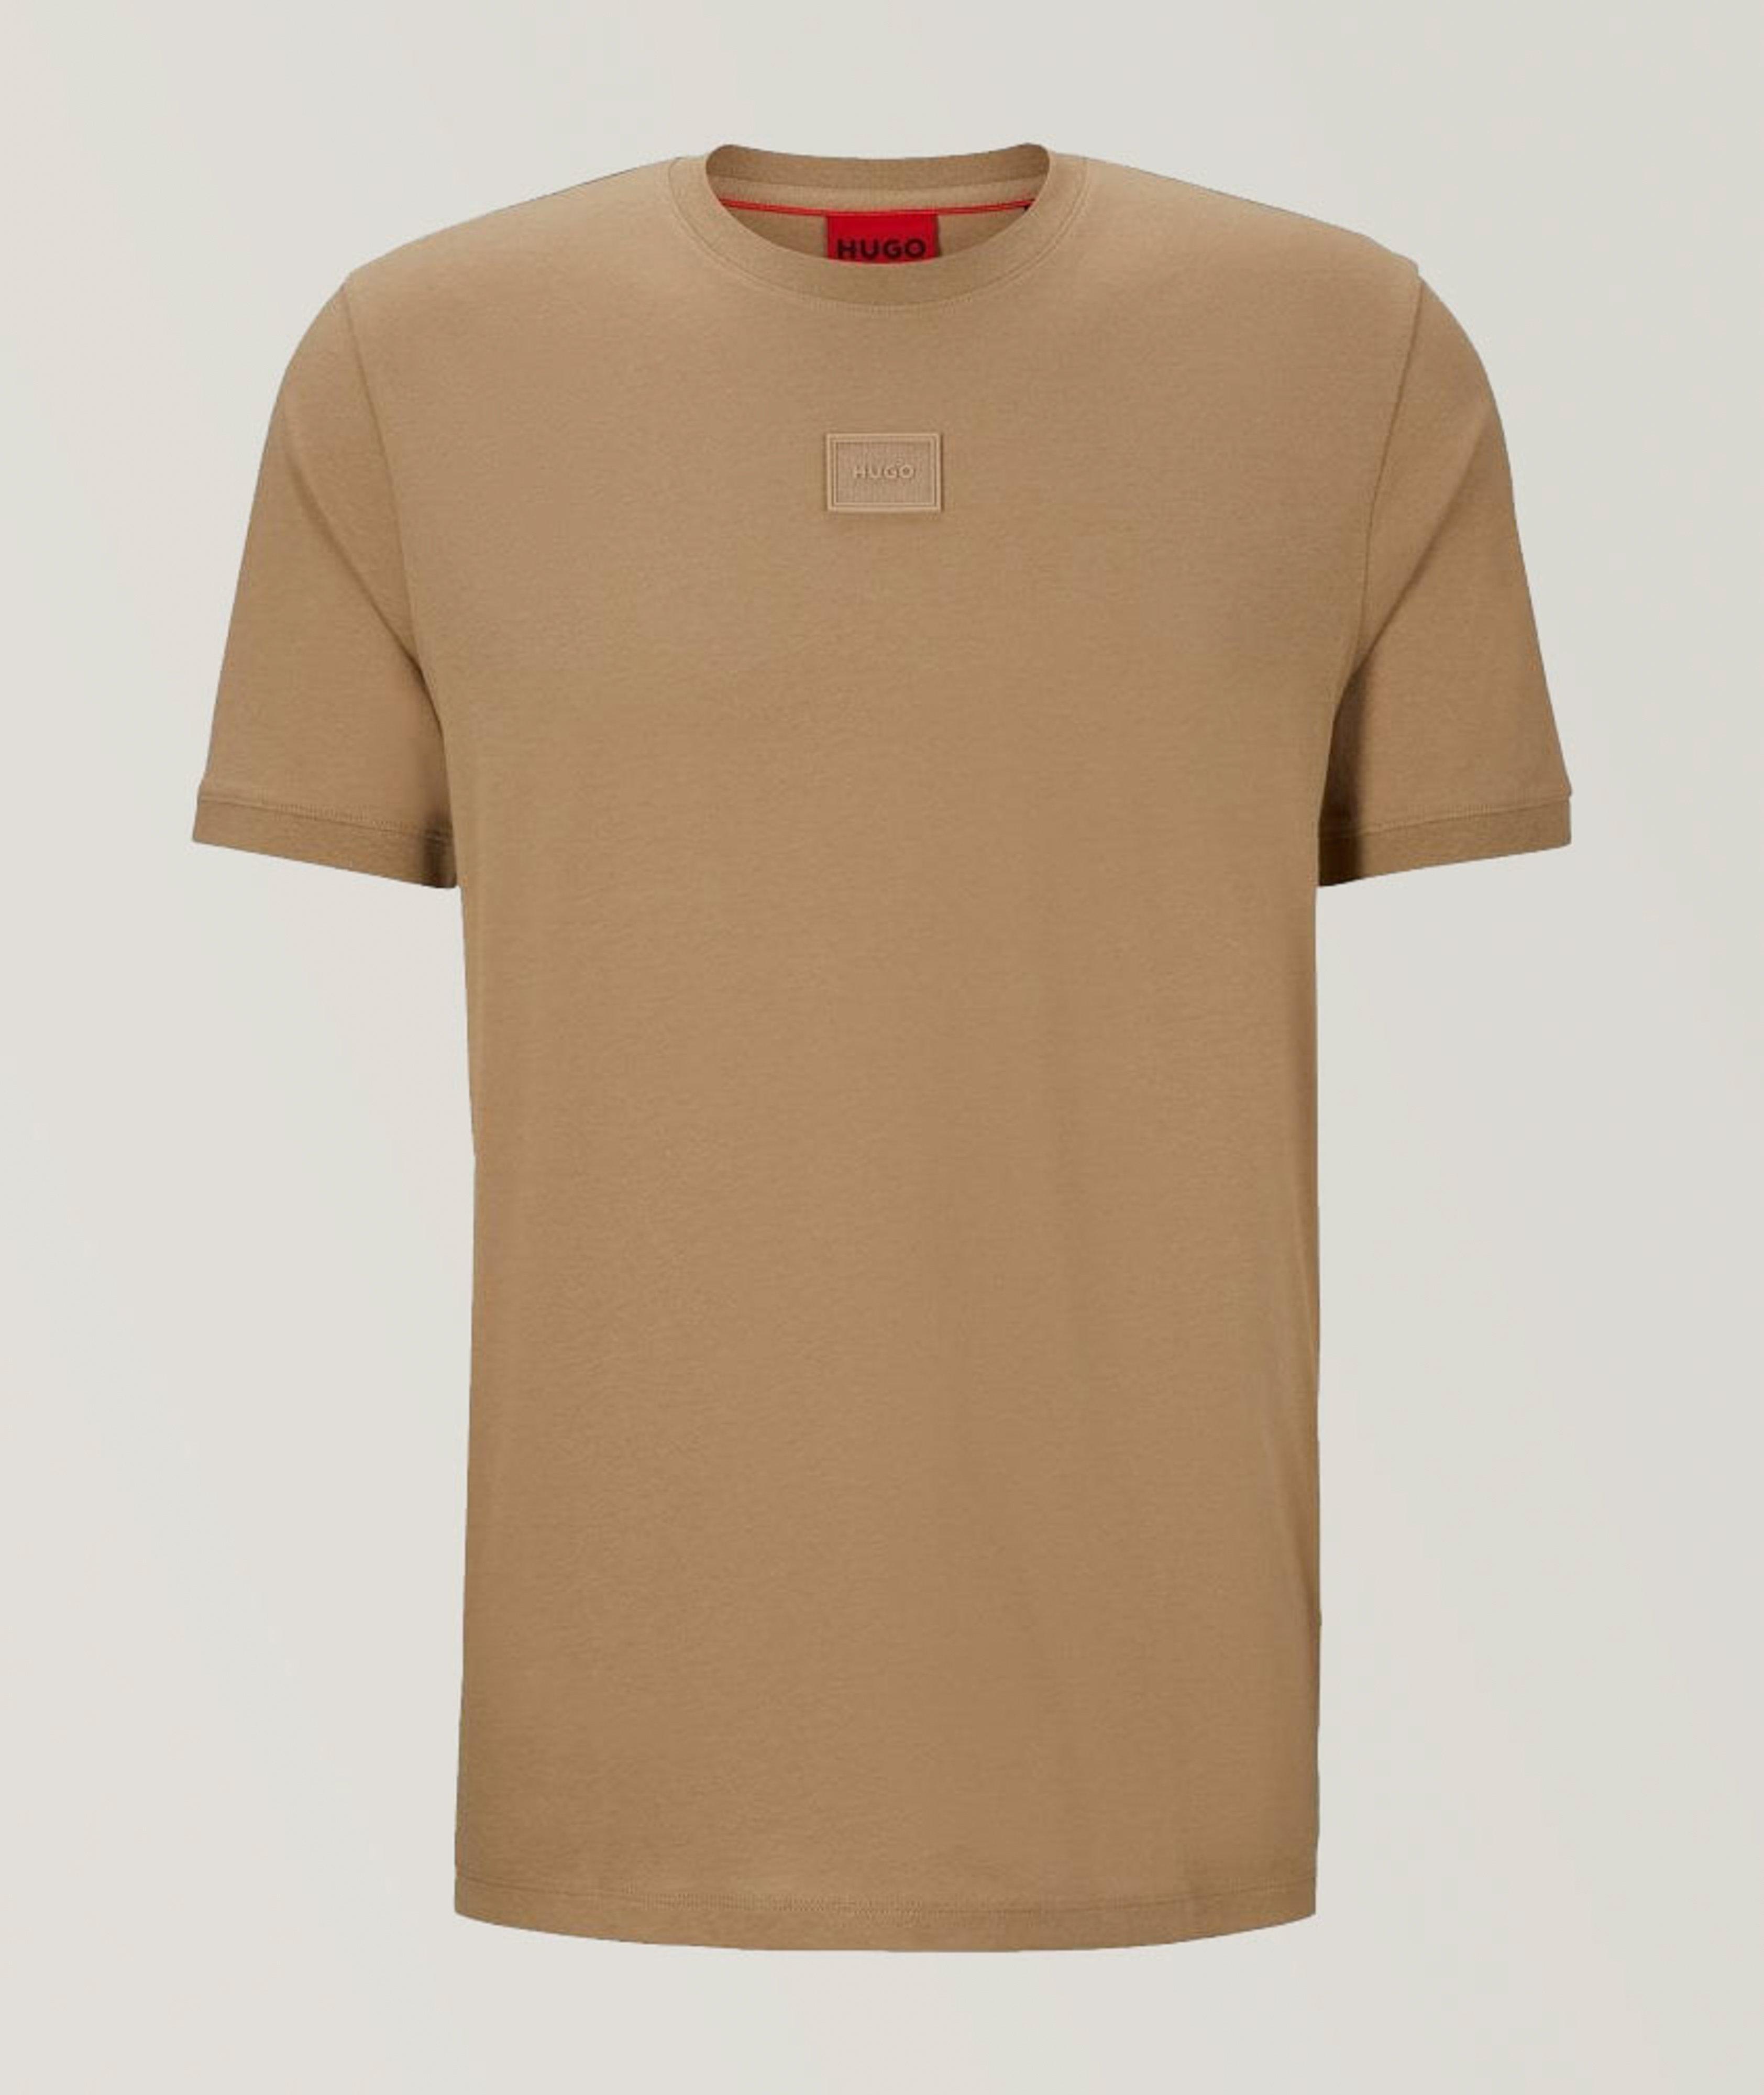 Diragolino Responsible Cotton T-Shirt